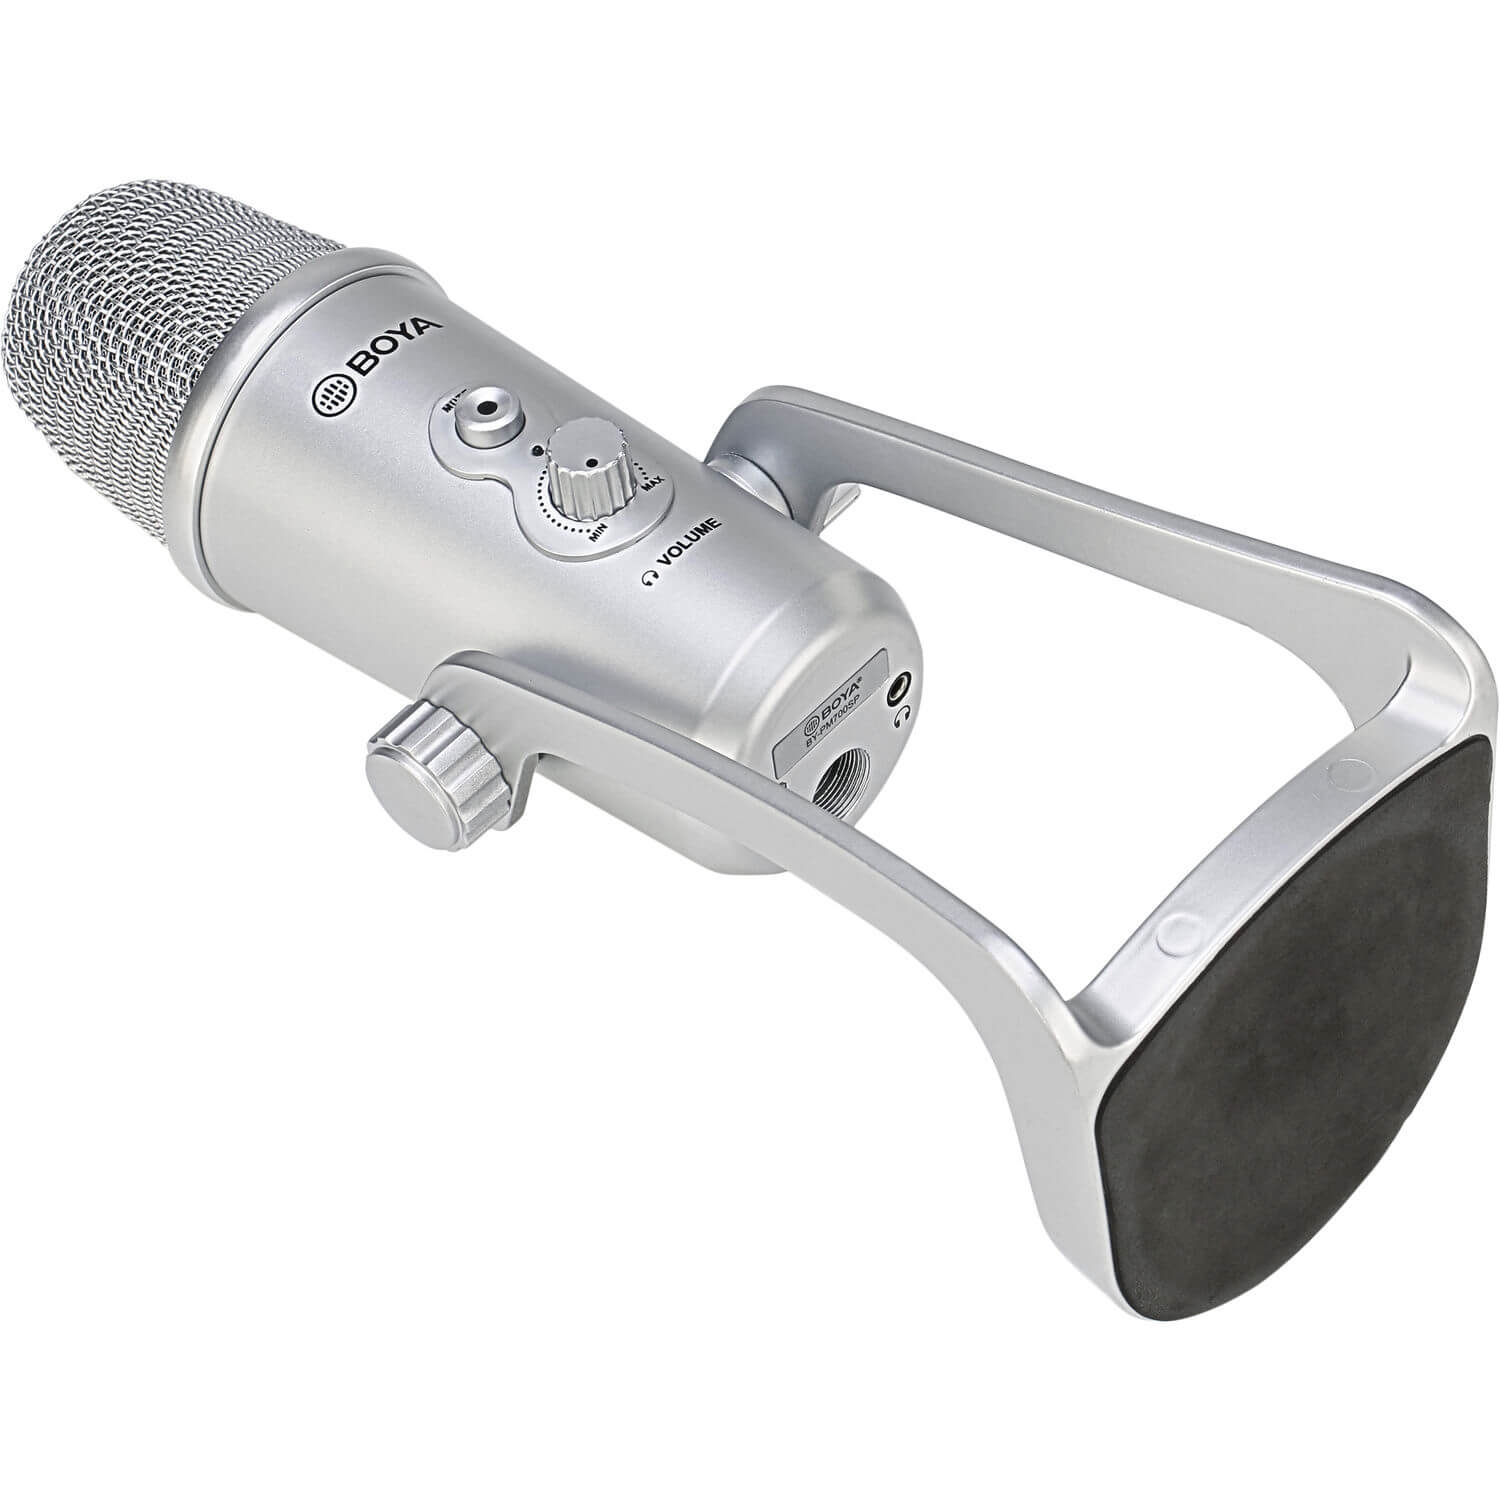 BOYA BY-PM700SP Multipattern USB Condenser Microphone